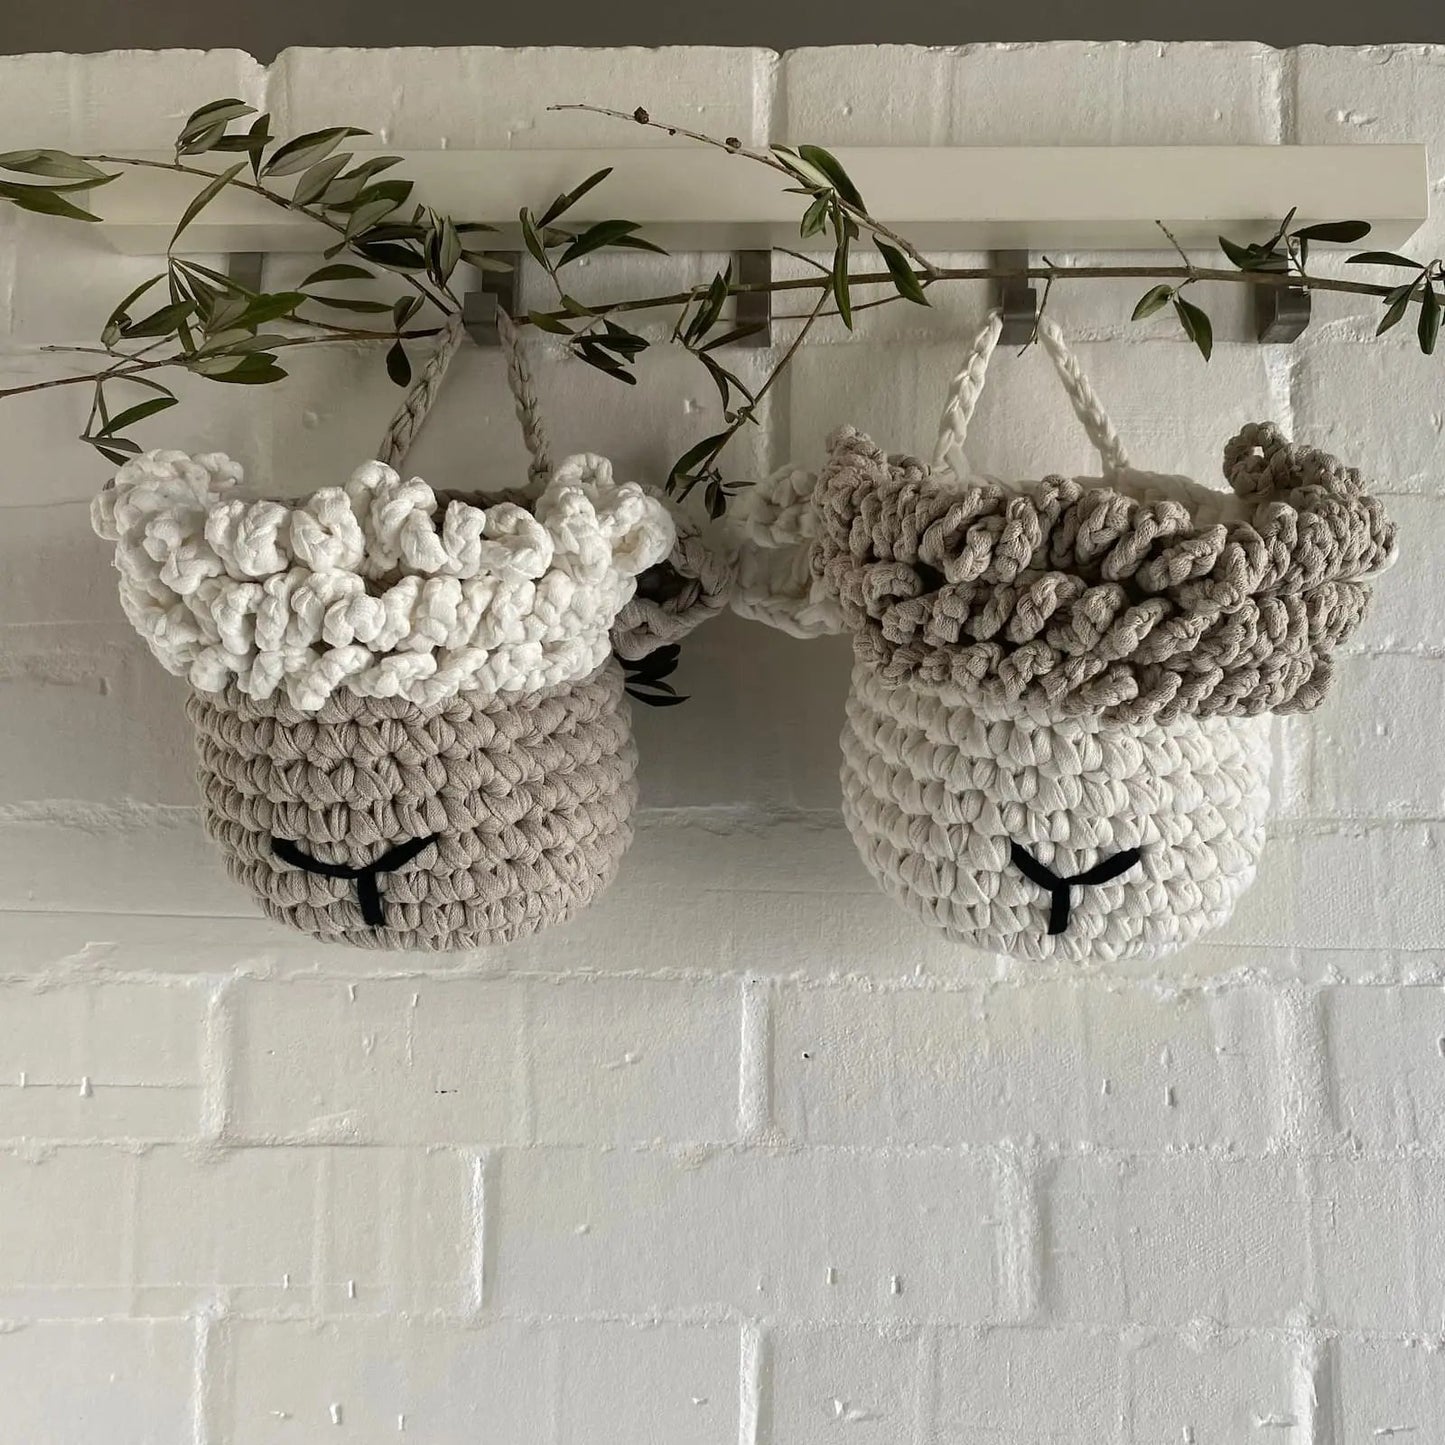 Sheep Crochet Storage Baskets - Looping Home